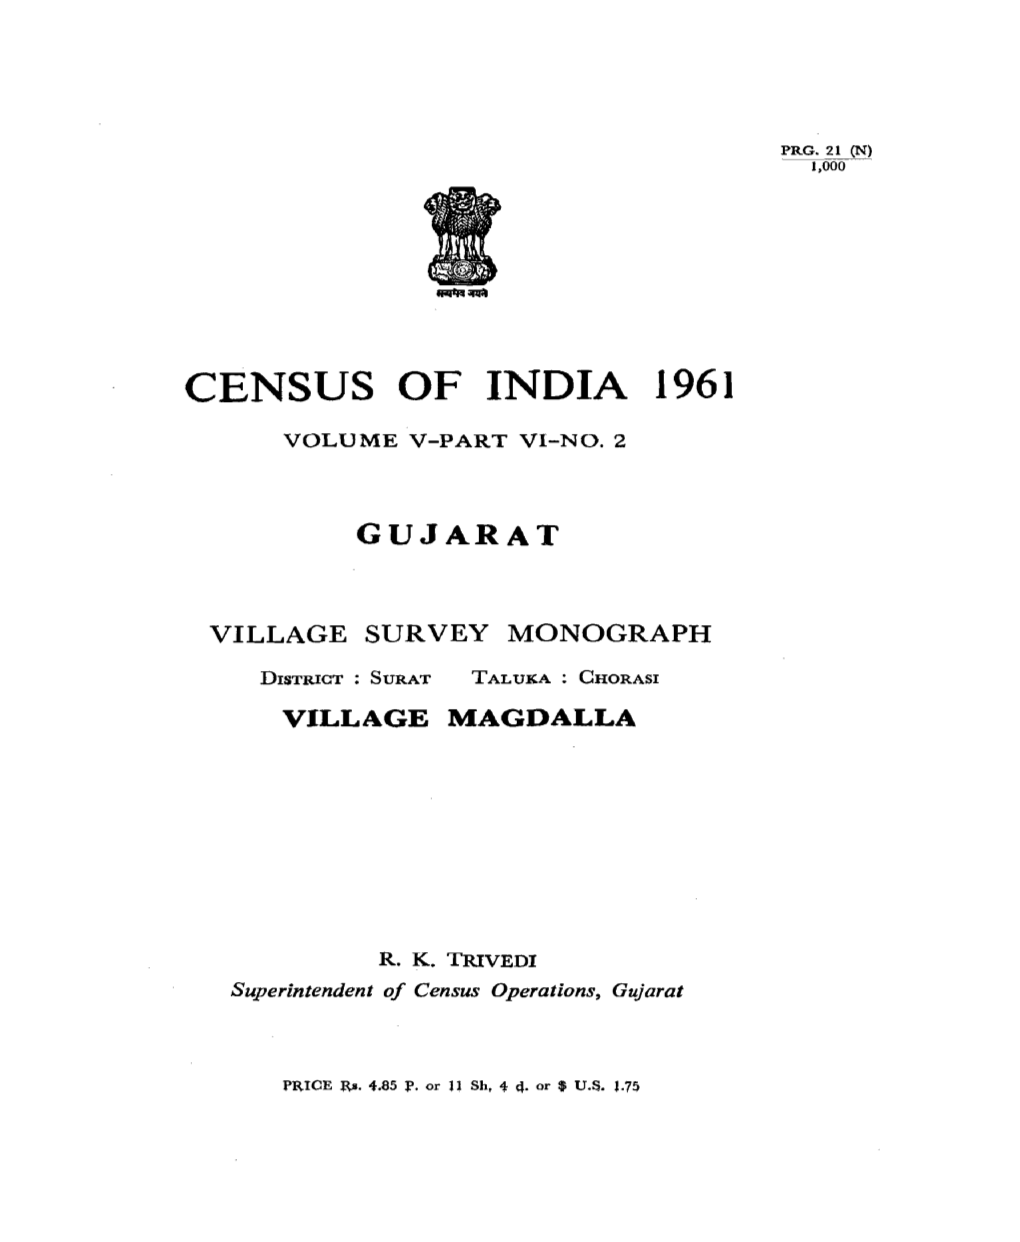 Village Survey Monograph, Village Magdalla, Part VI, No-2, Vol-V